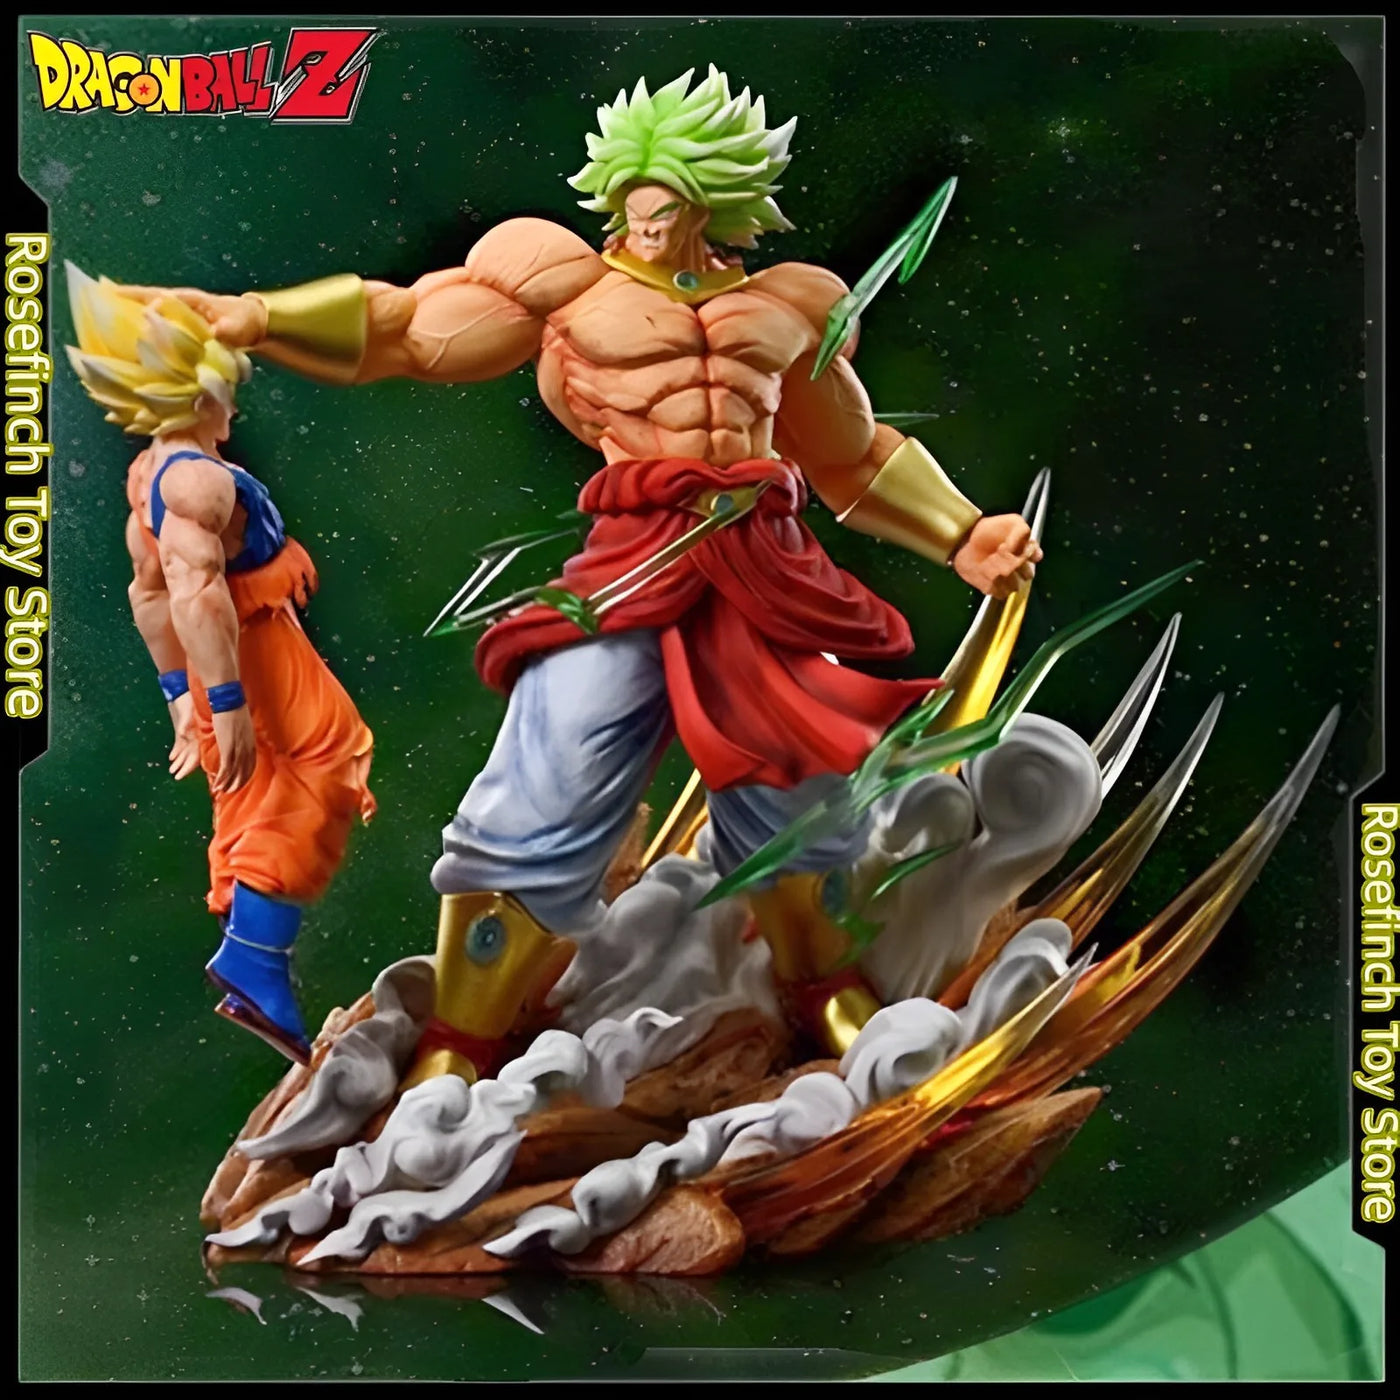 Figurine Broly Vs Goku - Dragon Ball Z Super